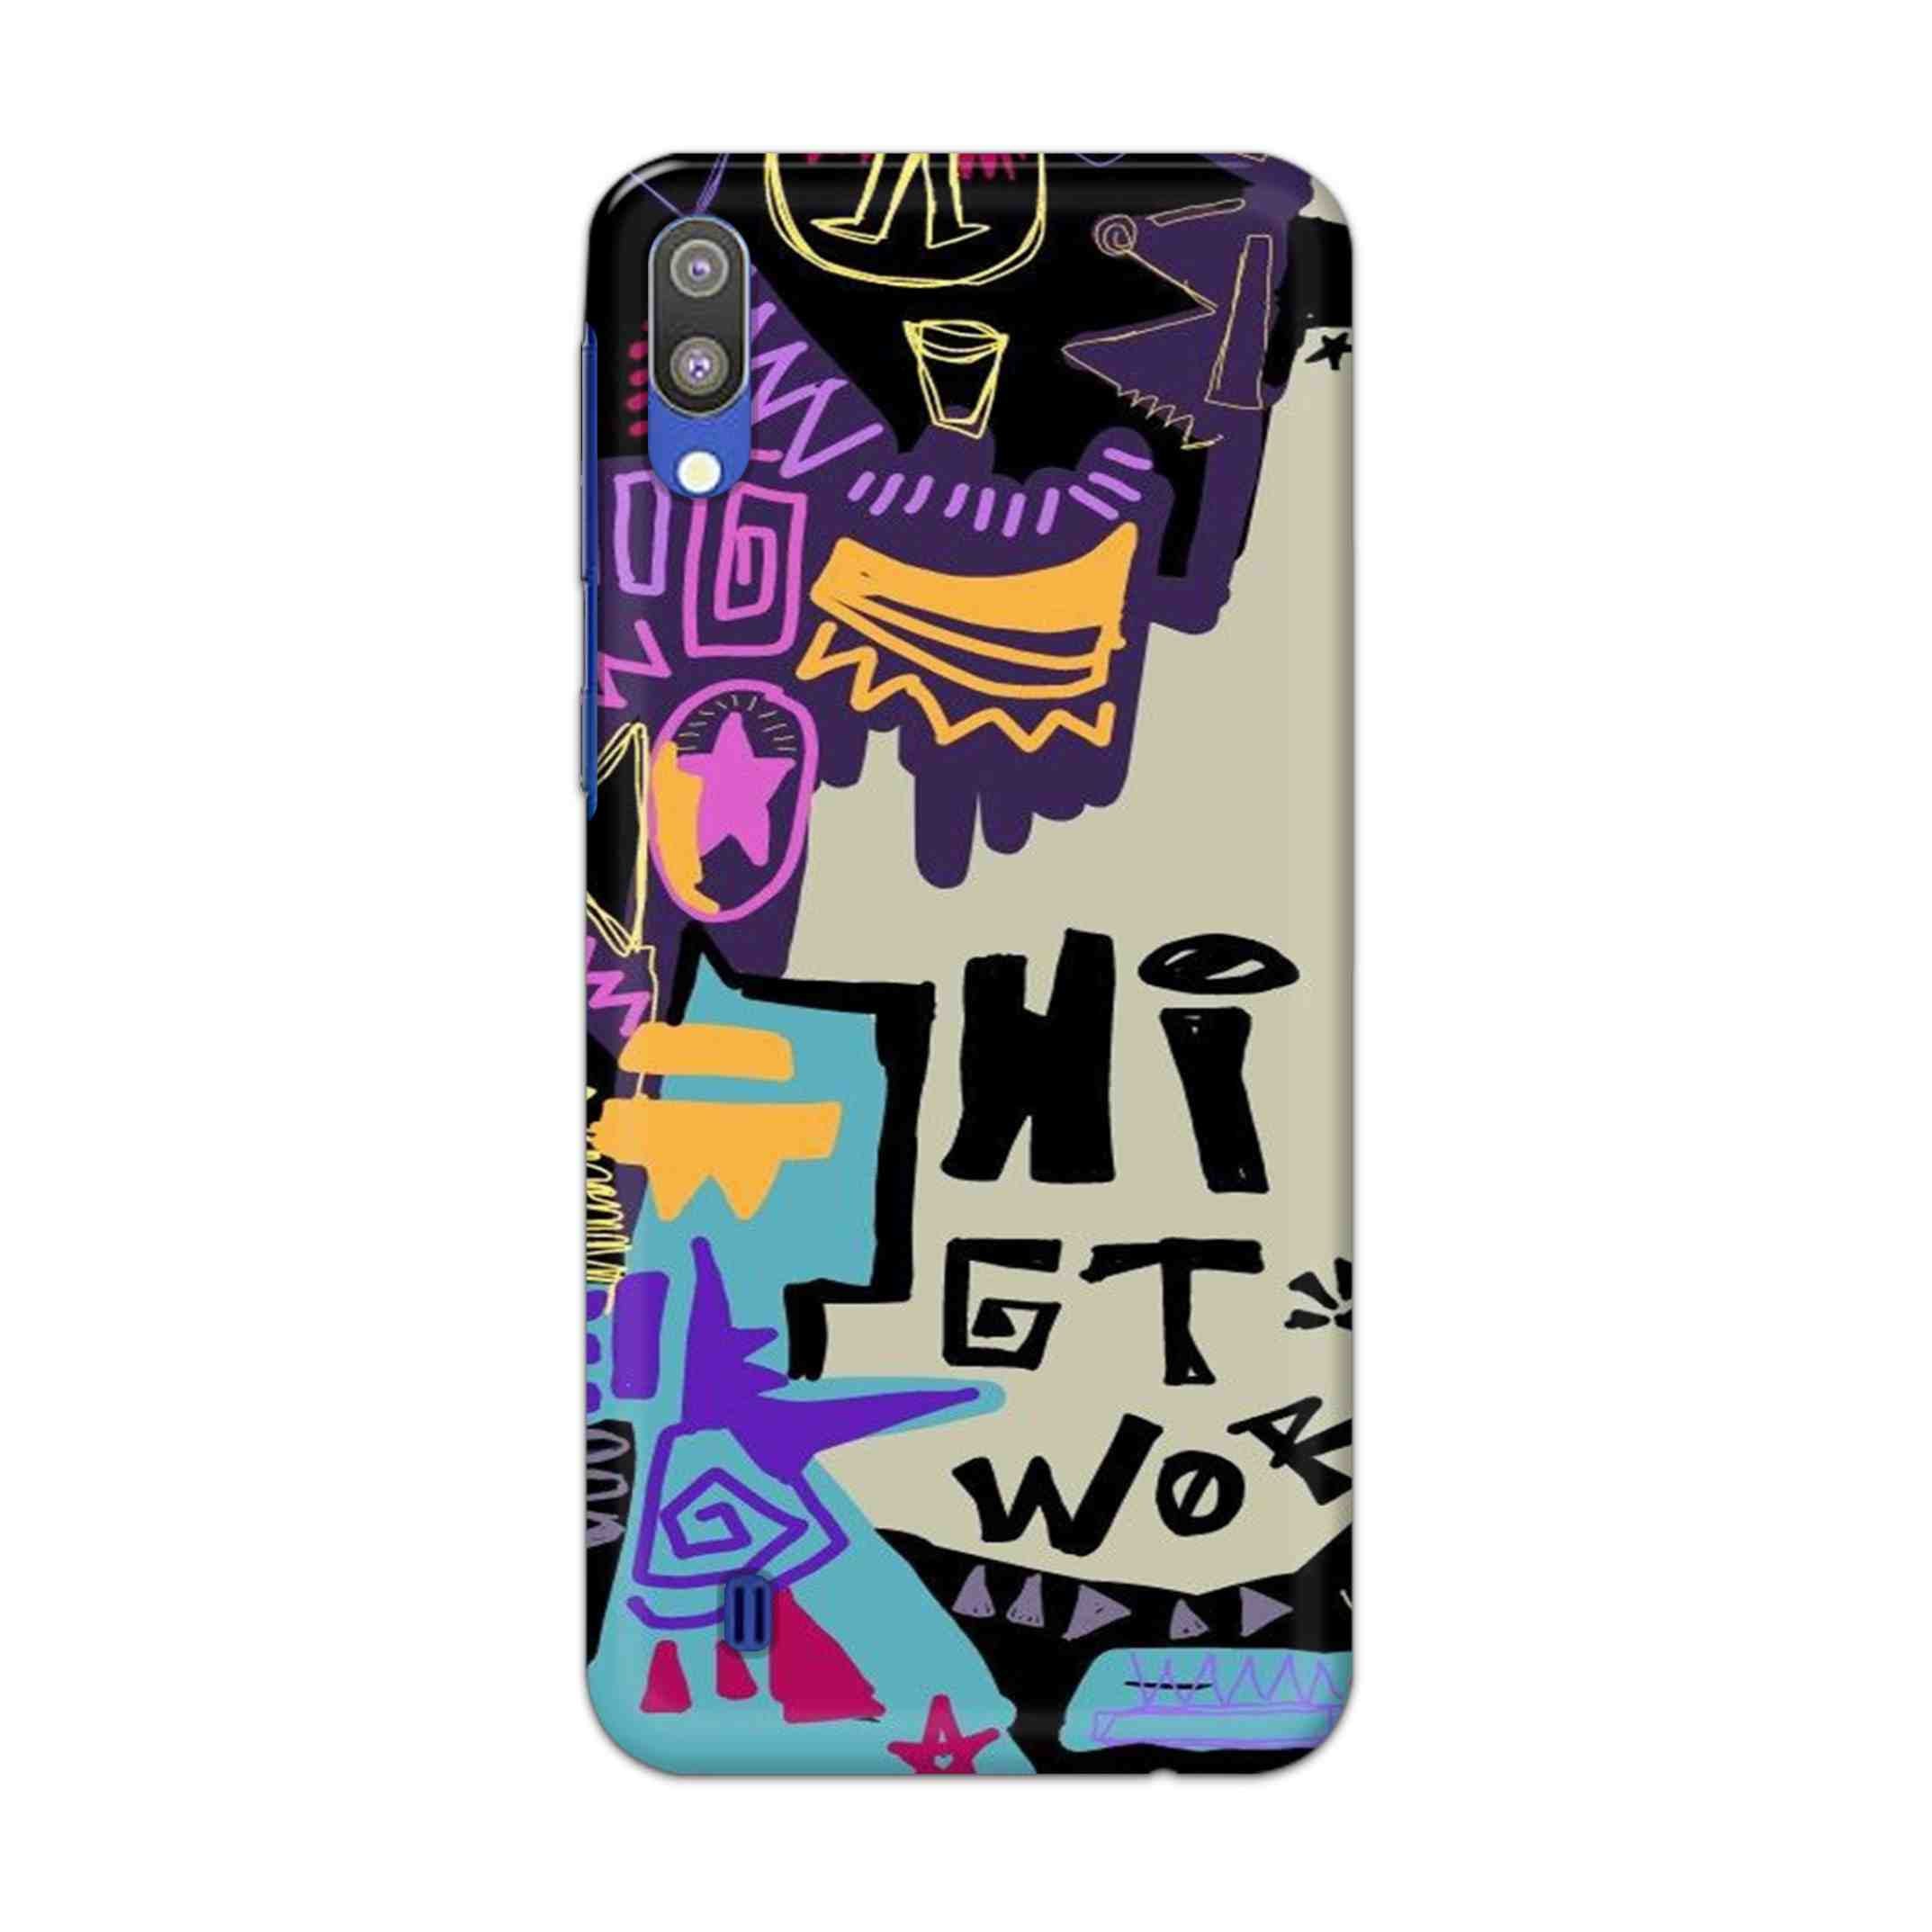 Buy Hi Gt World Hard Back Mobile Phone Case Cover For Samsung Galaxy M10 Online